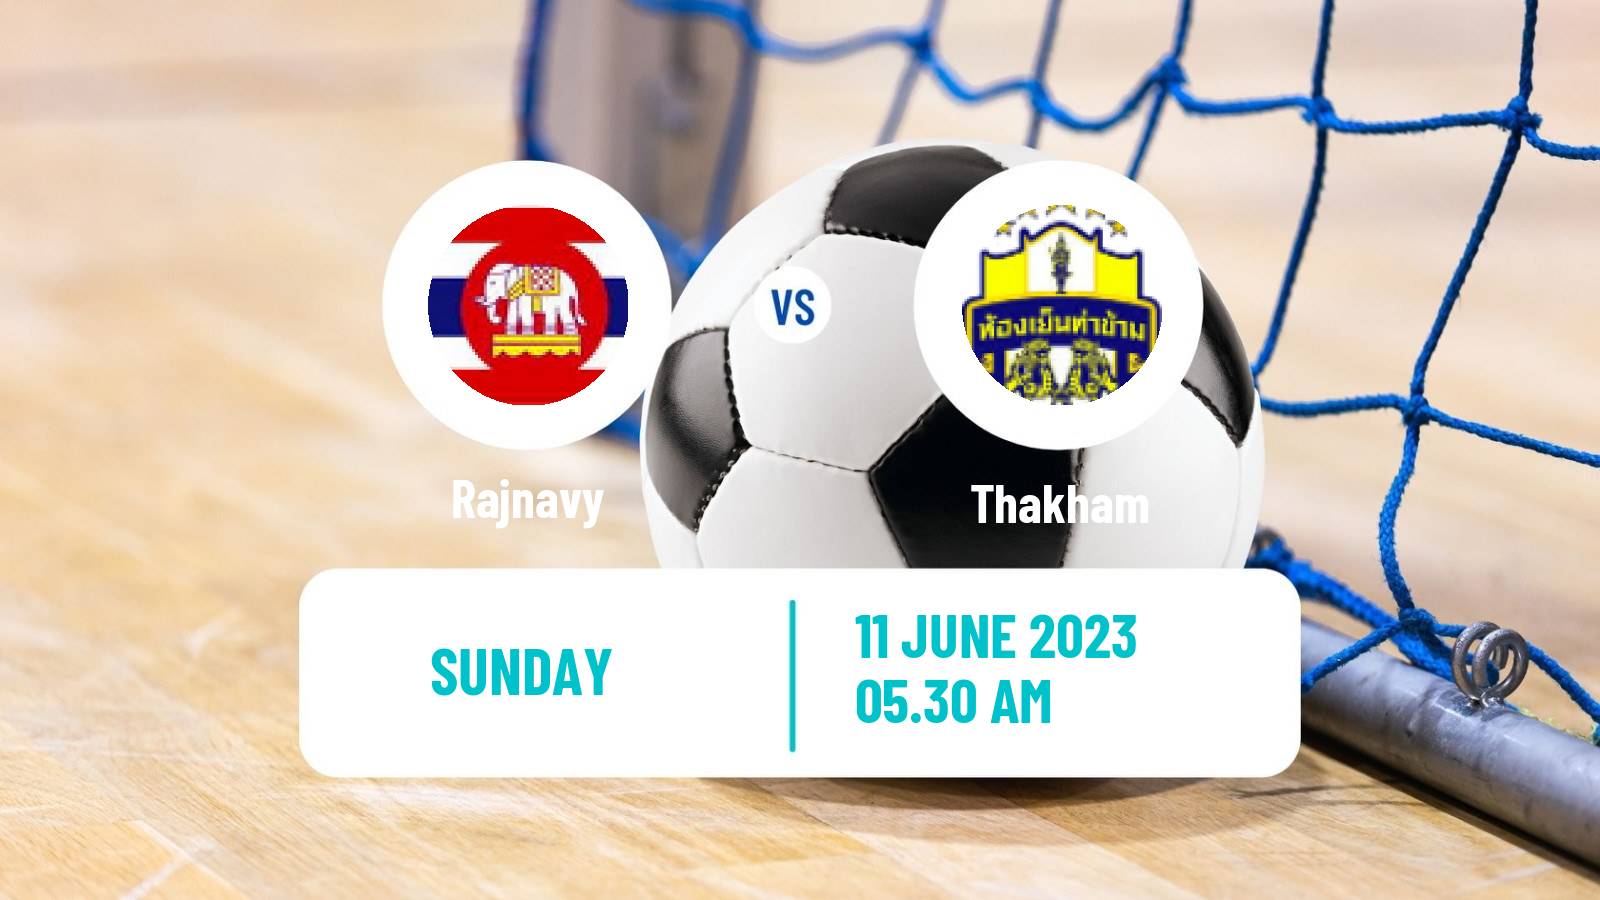 Futsal Thai League Futsal Rajnavy - Thakham